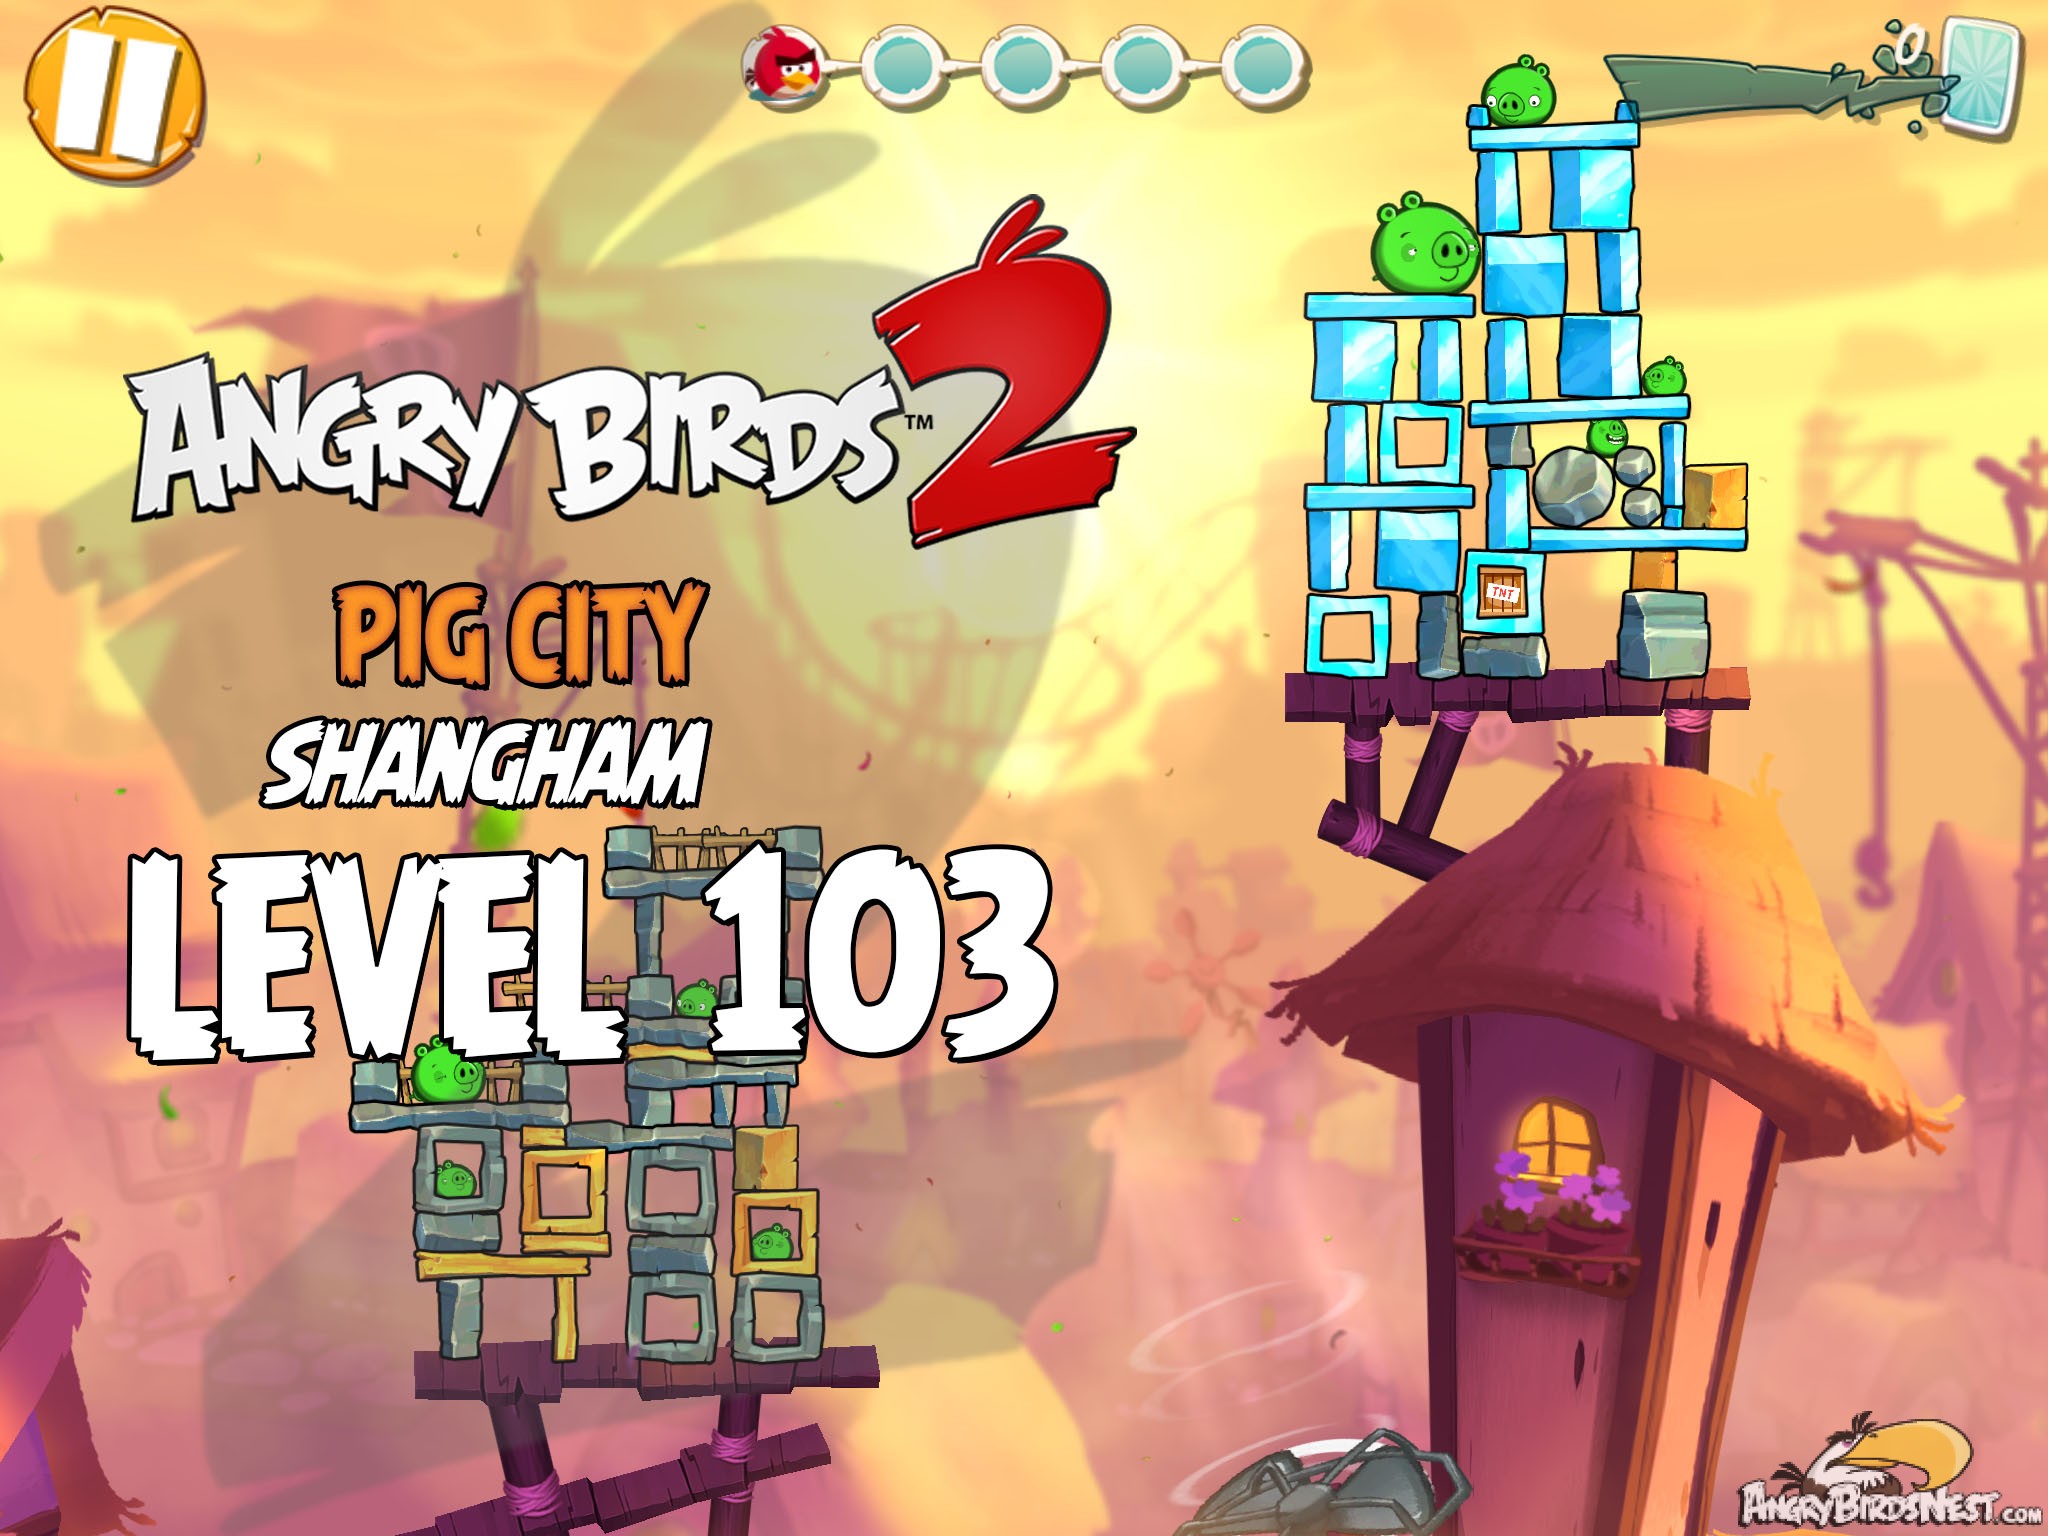 Angry Birds 2 Pig City Shangham Level 103